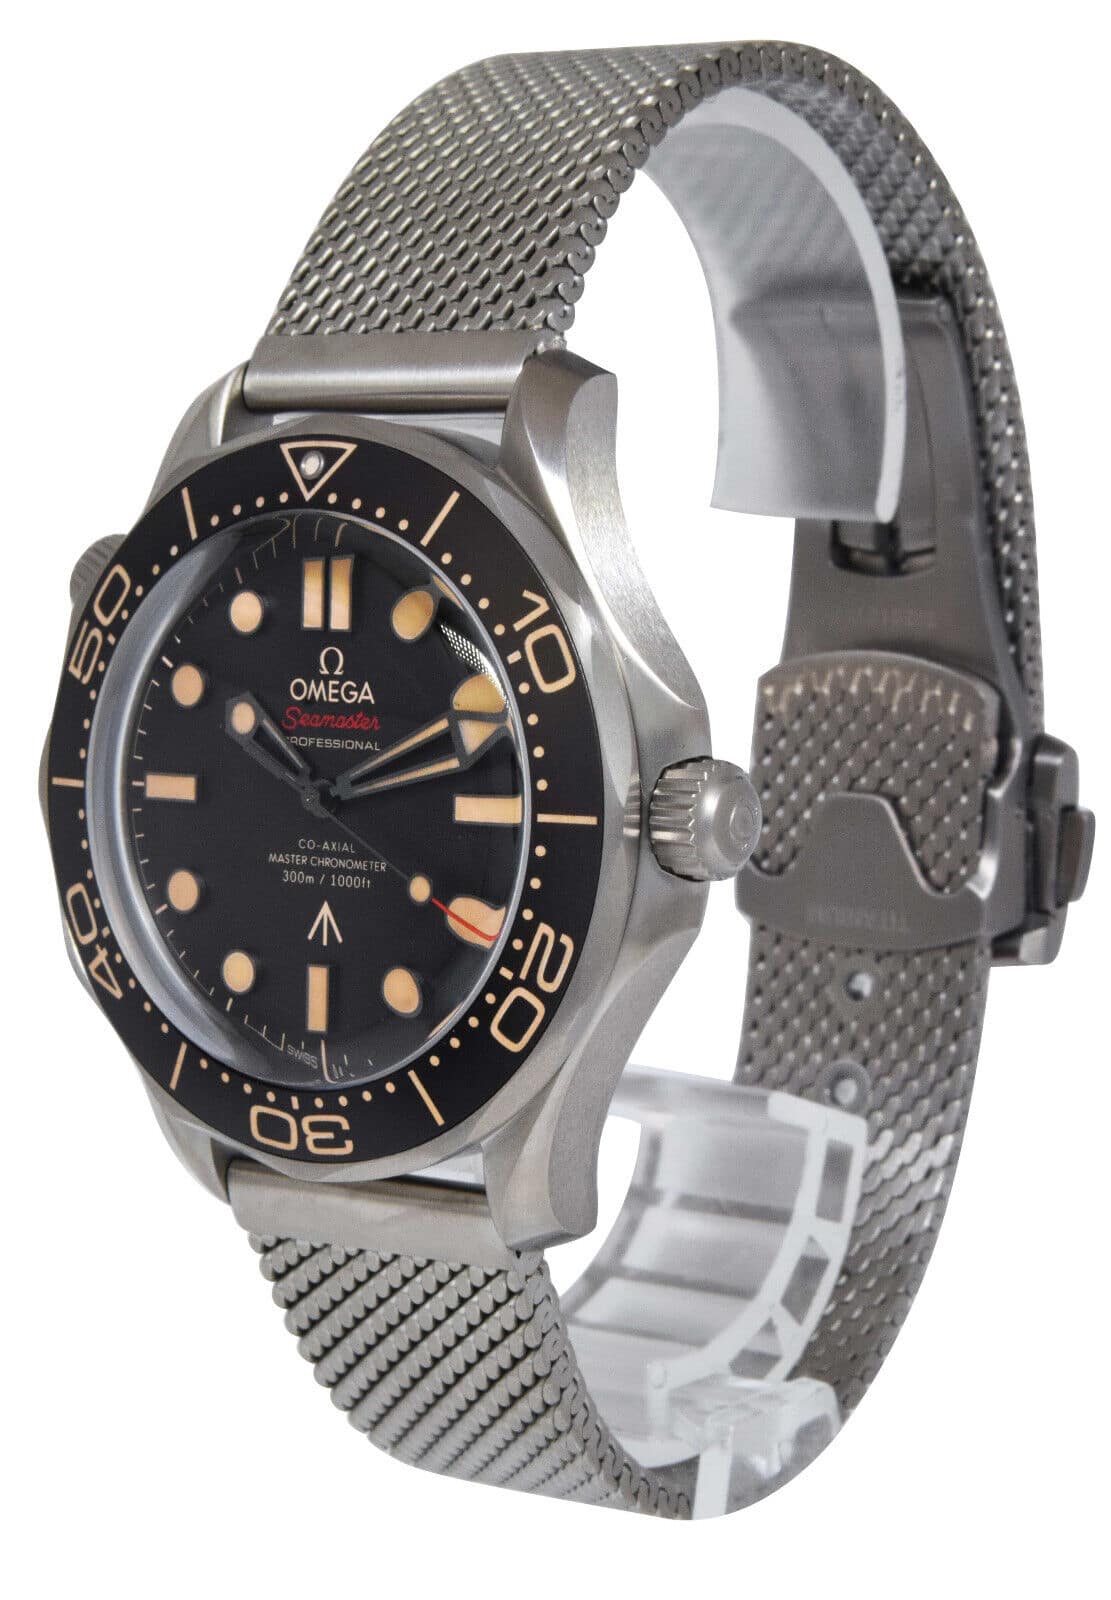 NEW Seamaster Diver 300m 007 Edition Titanium 42mm Watch B/P 210.90.42.20.01.001